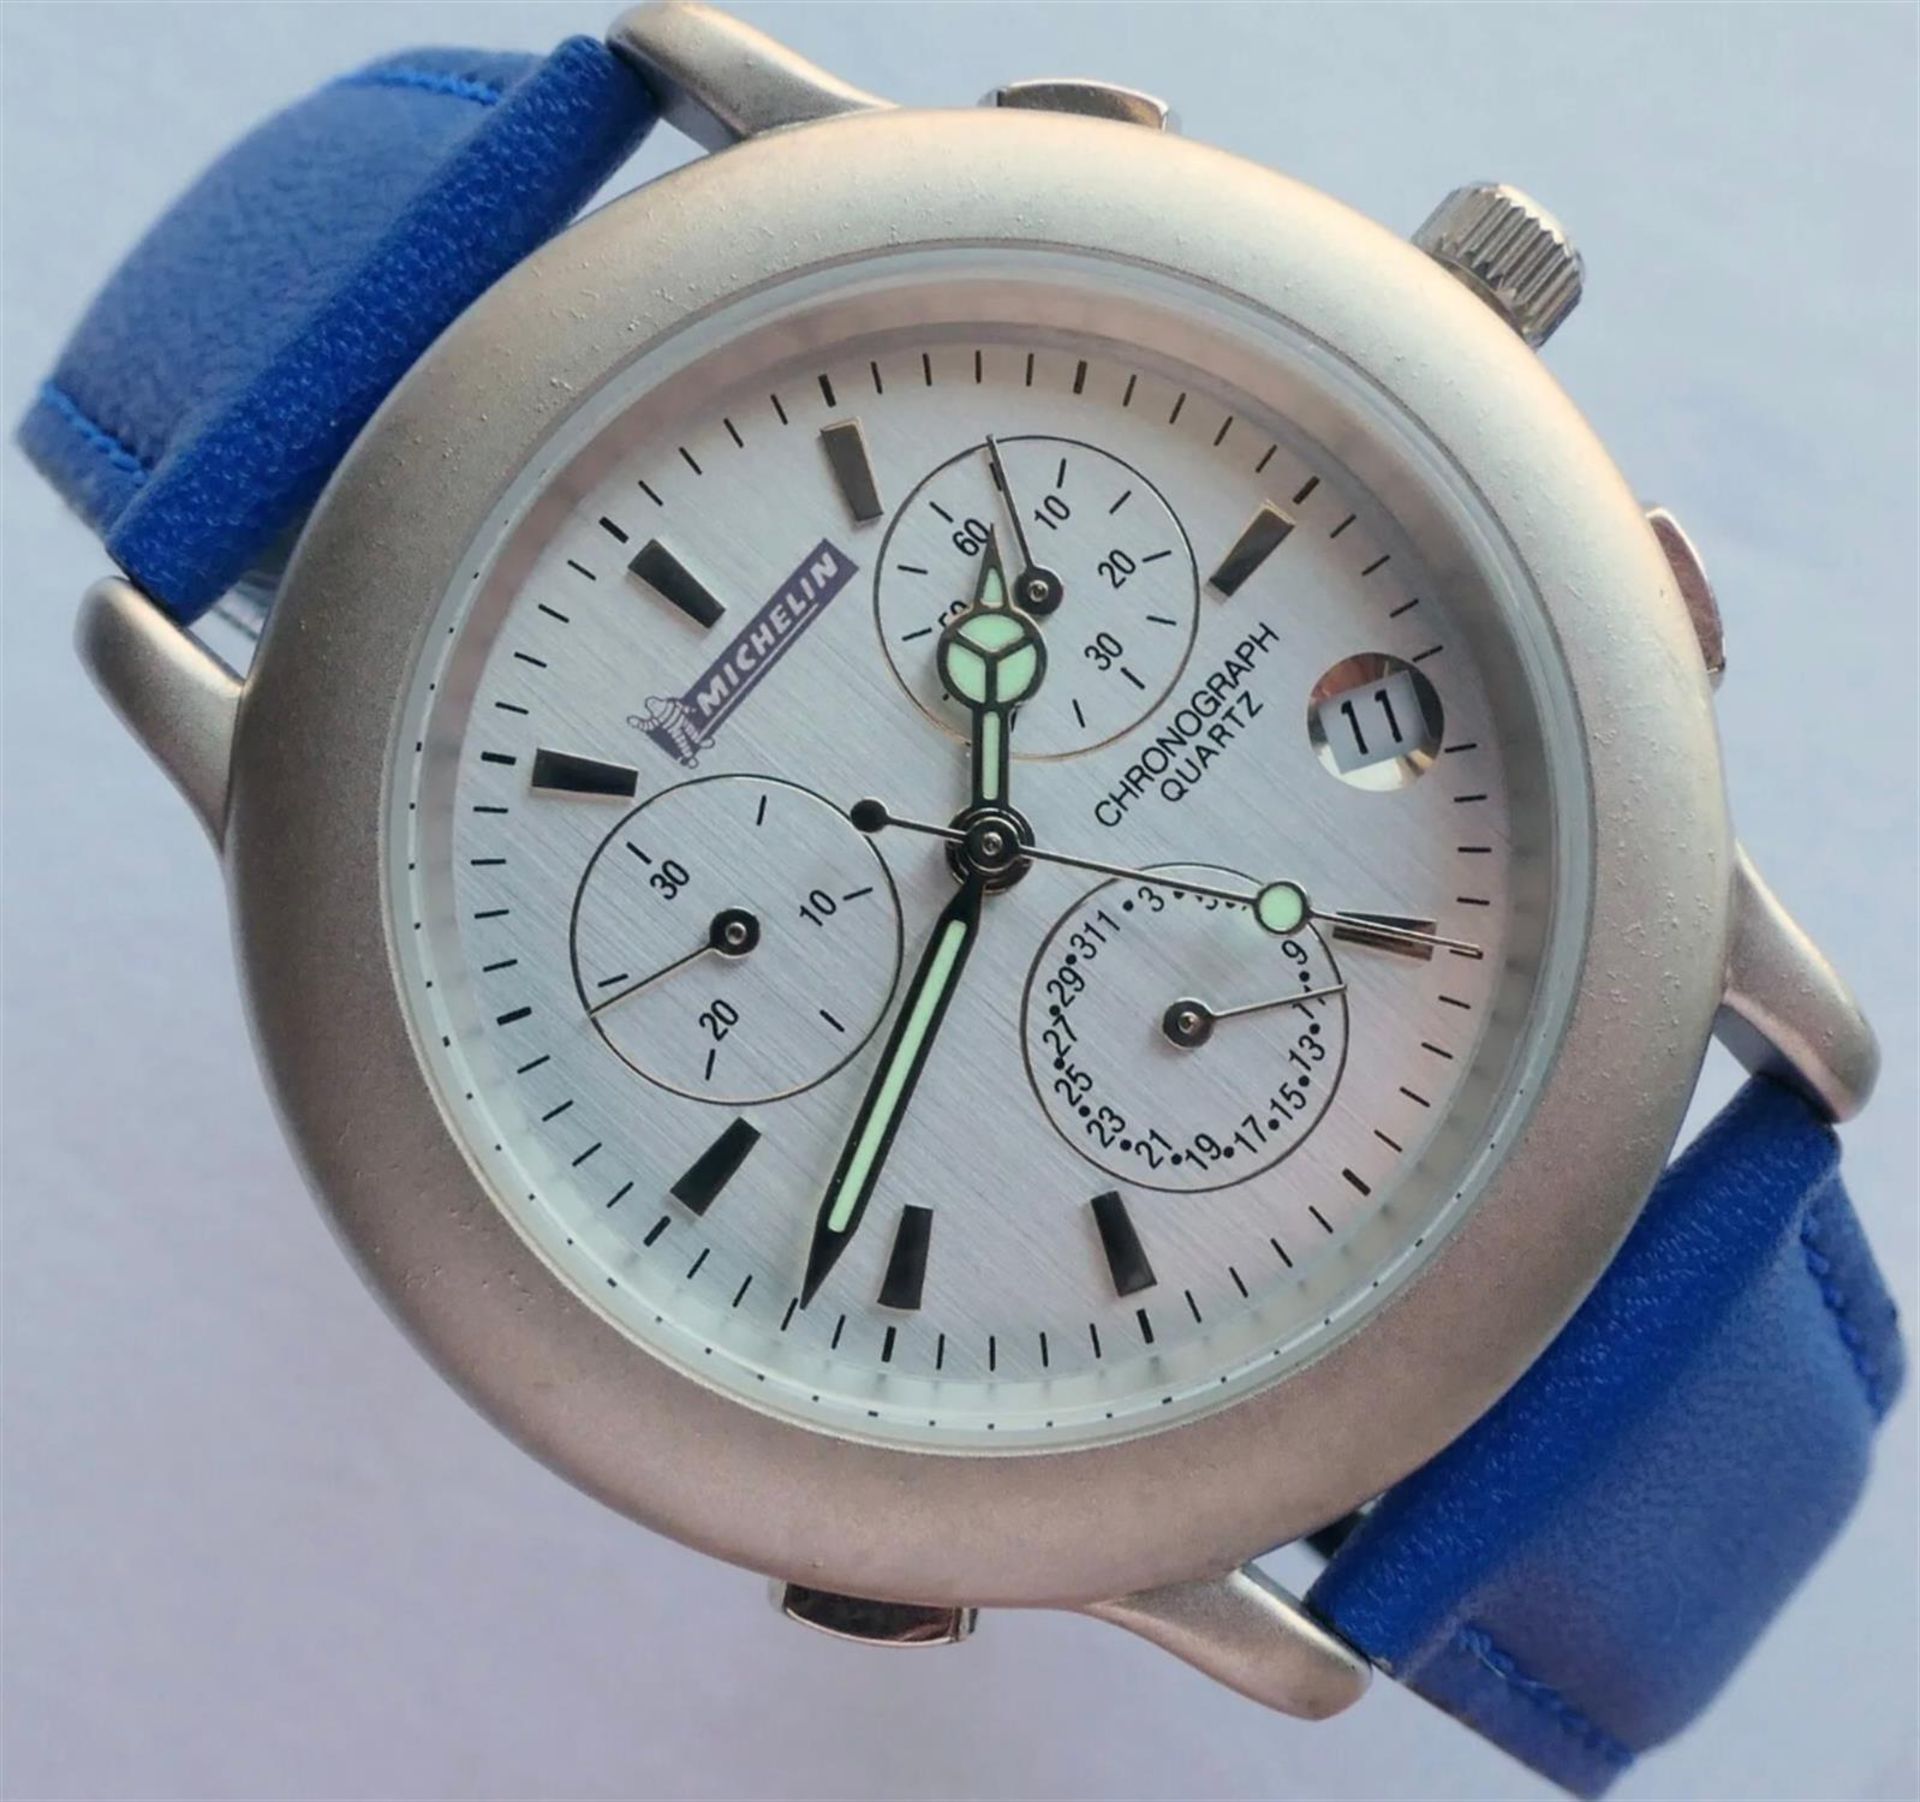 An Exceptional Michelin Bibendum Chronograph - Image 2 of 10